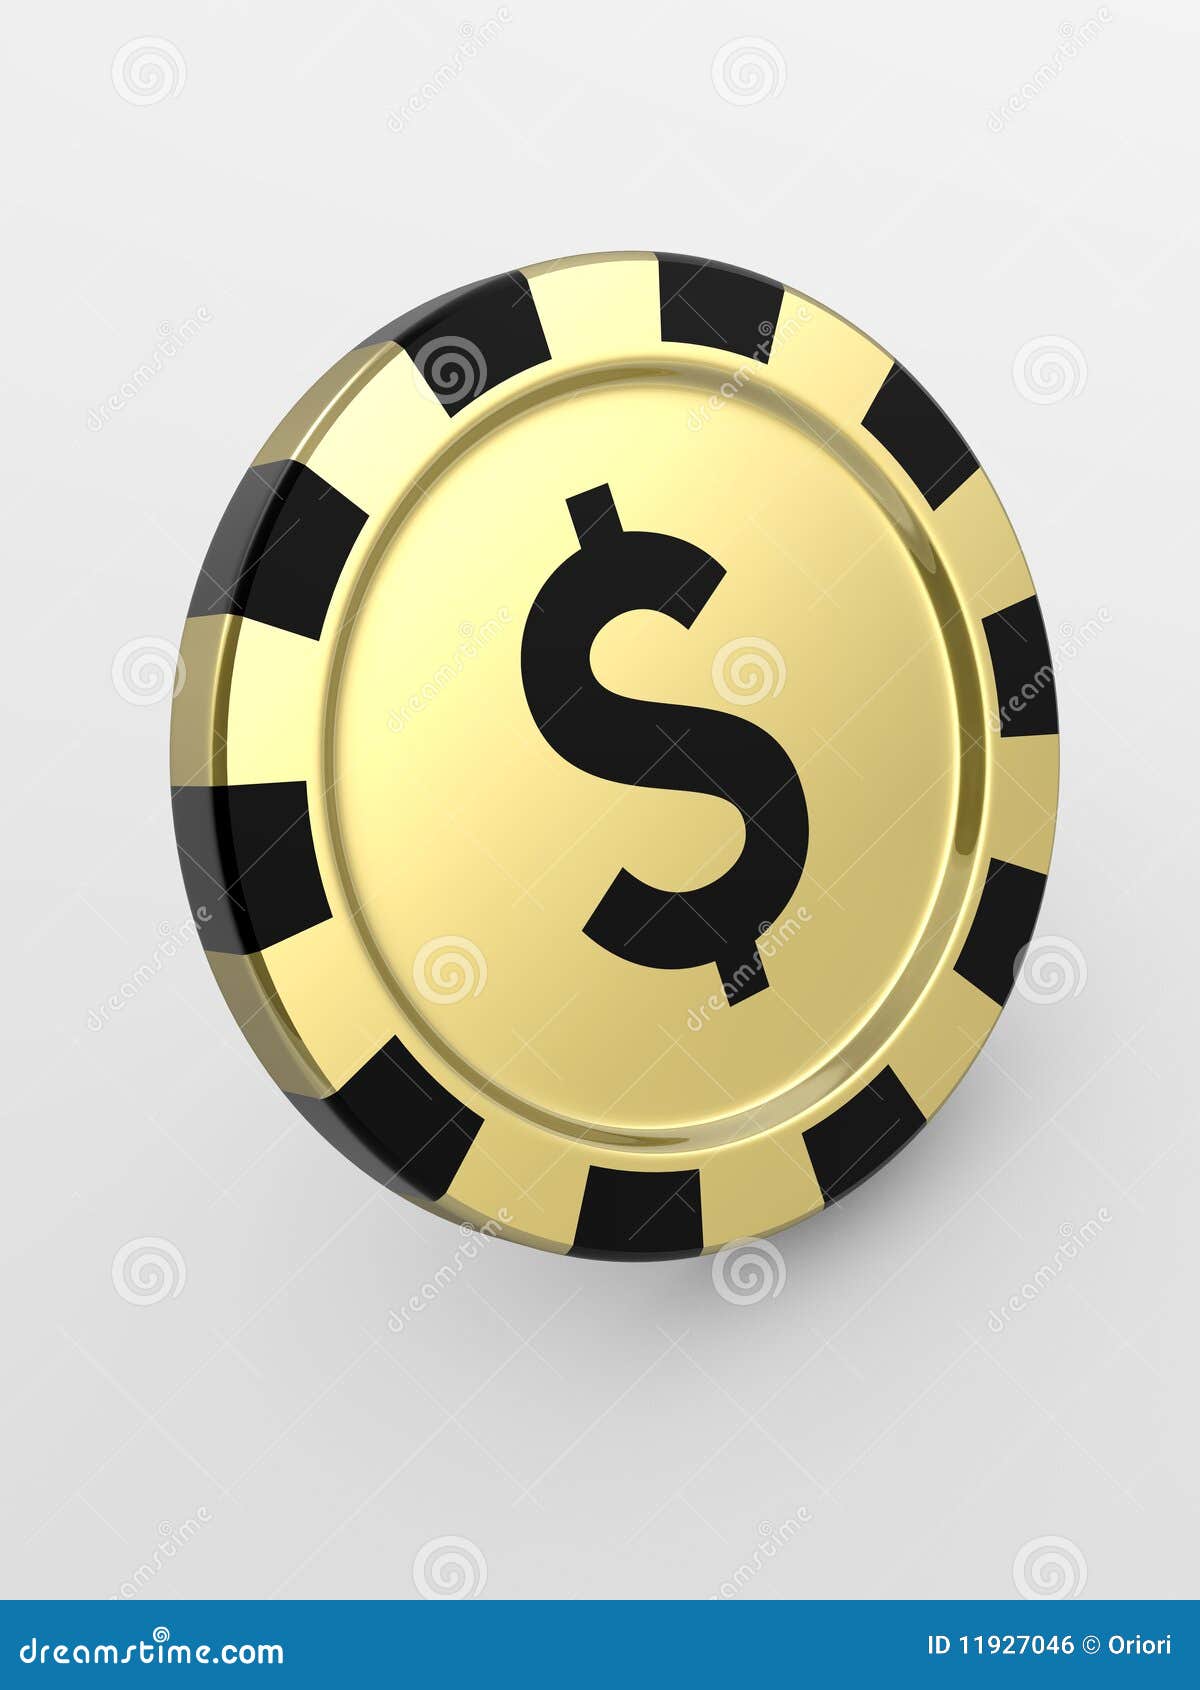 Chip In Casino